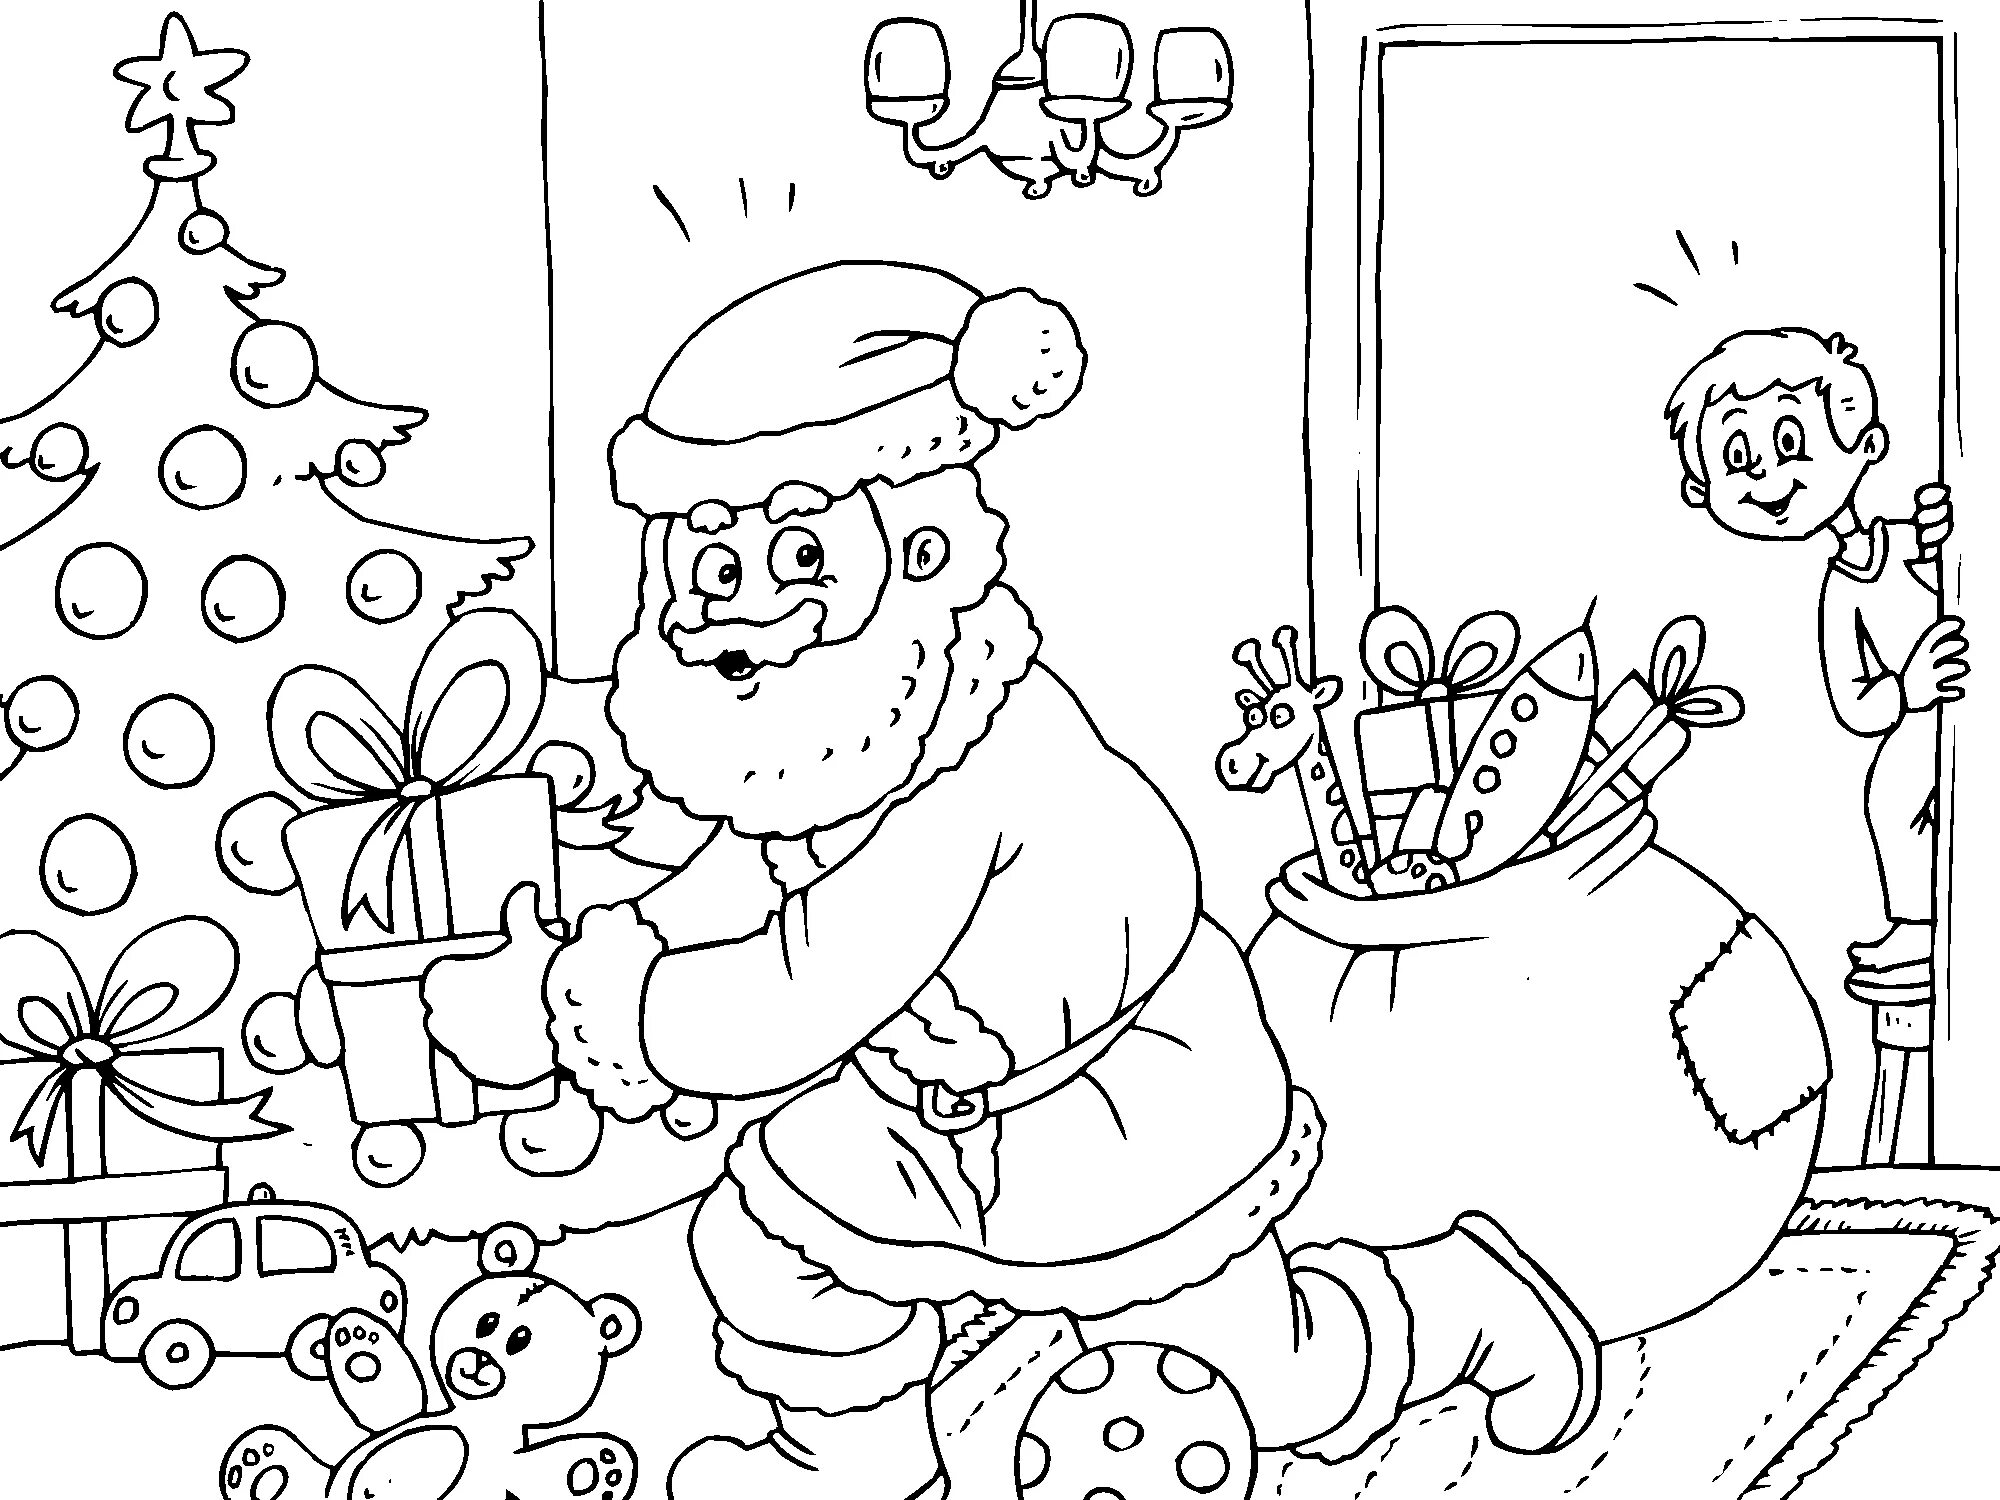 Amazing santa claus coloring page